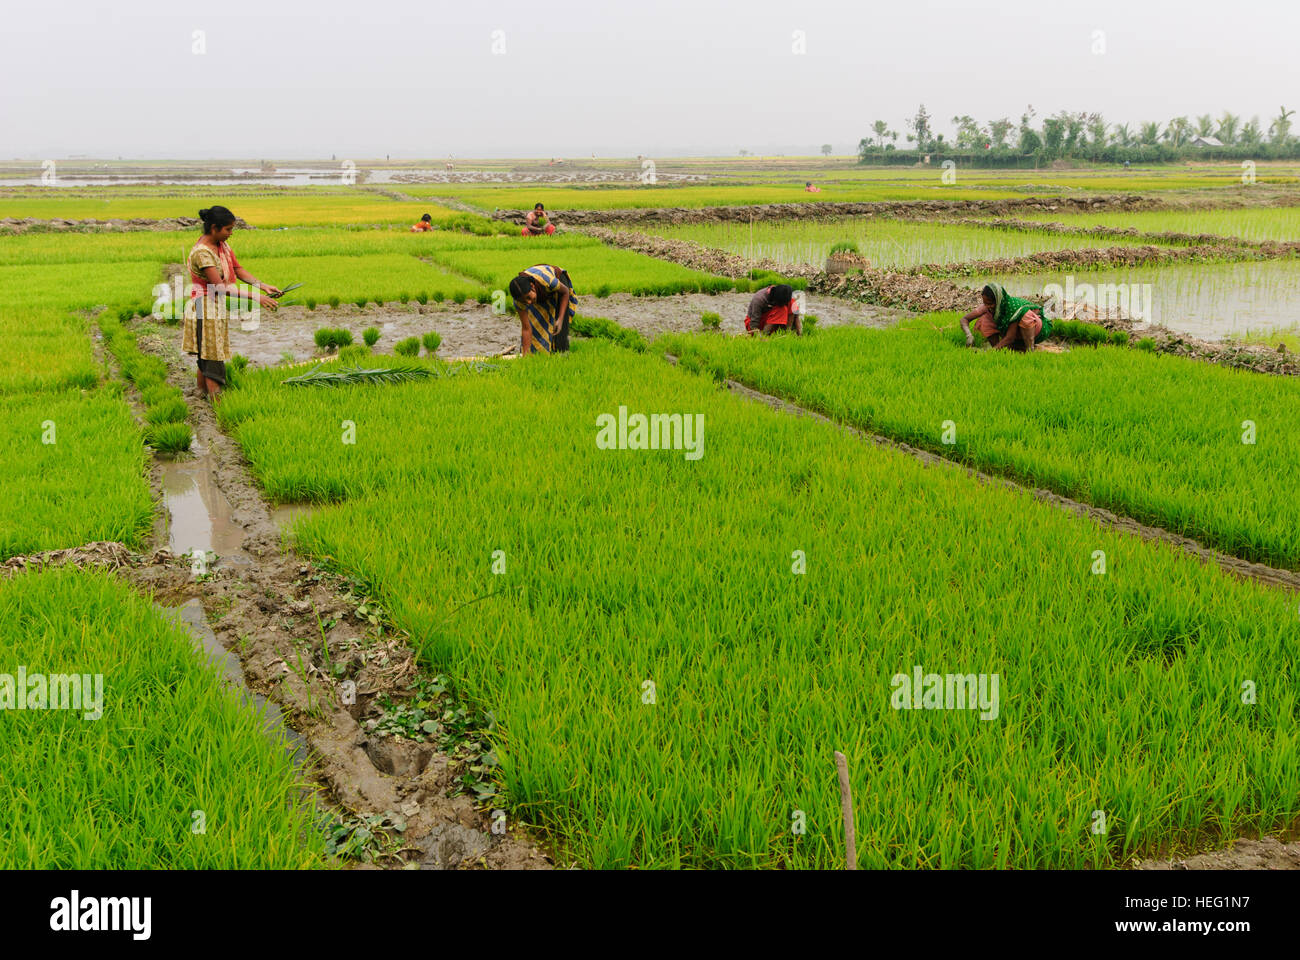 Hariargup: Rice fields, women plant rice, Khulna Division, Bangladesh Stock Photo